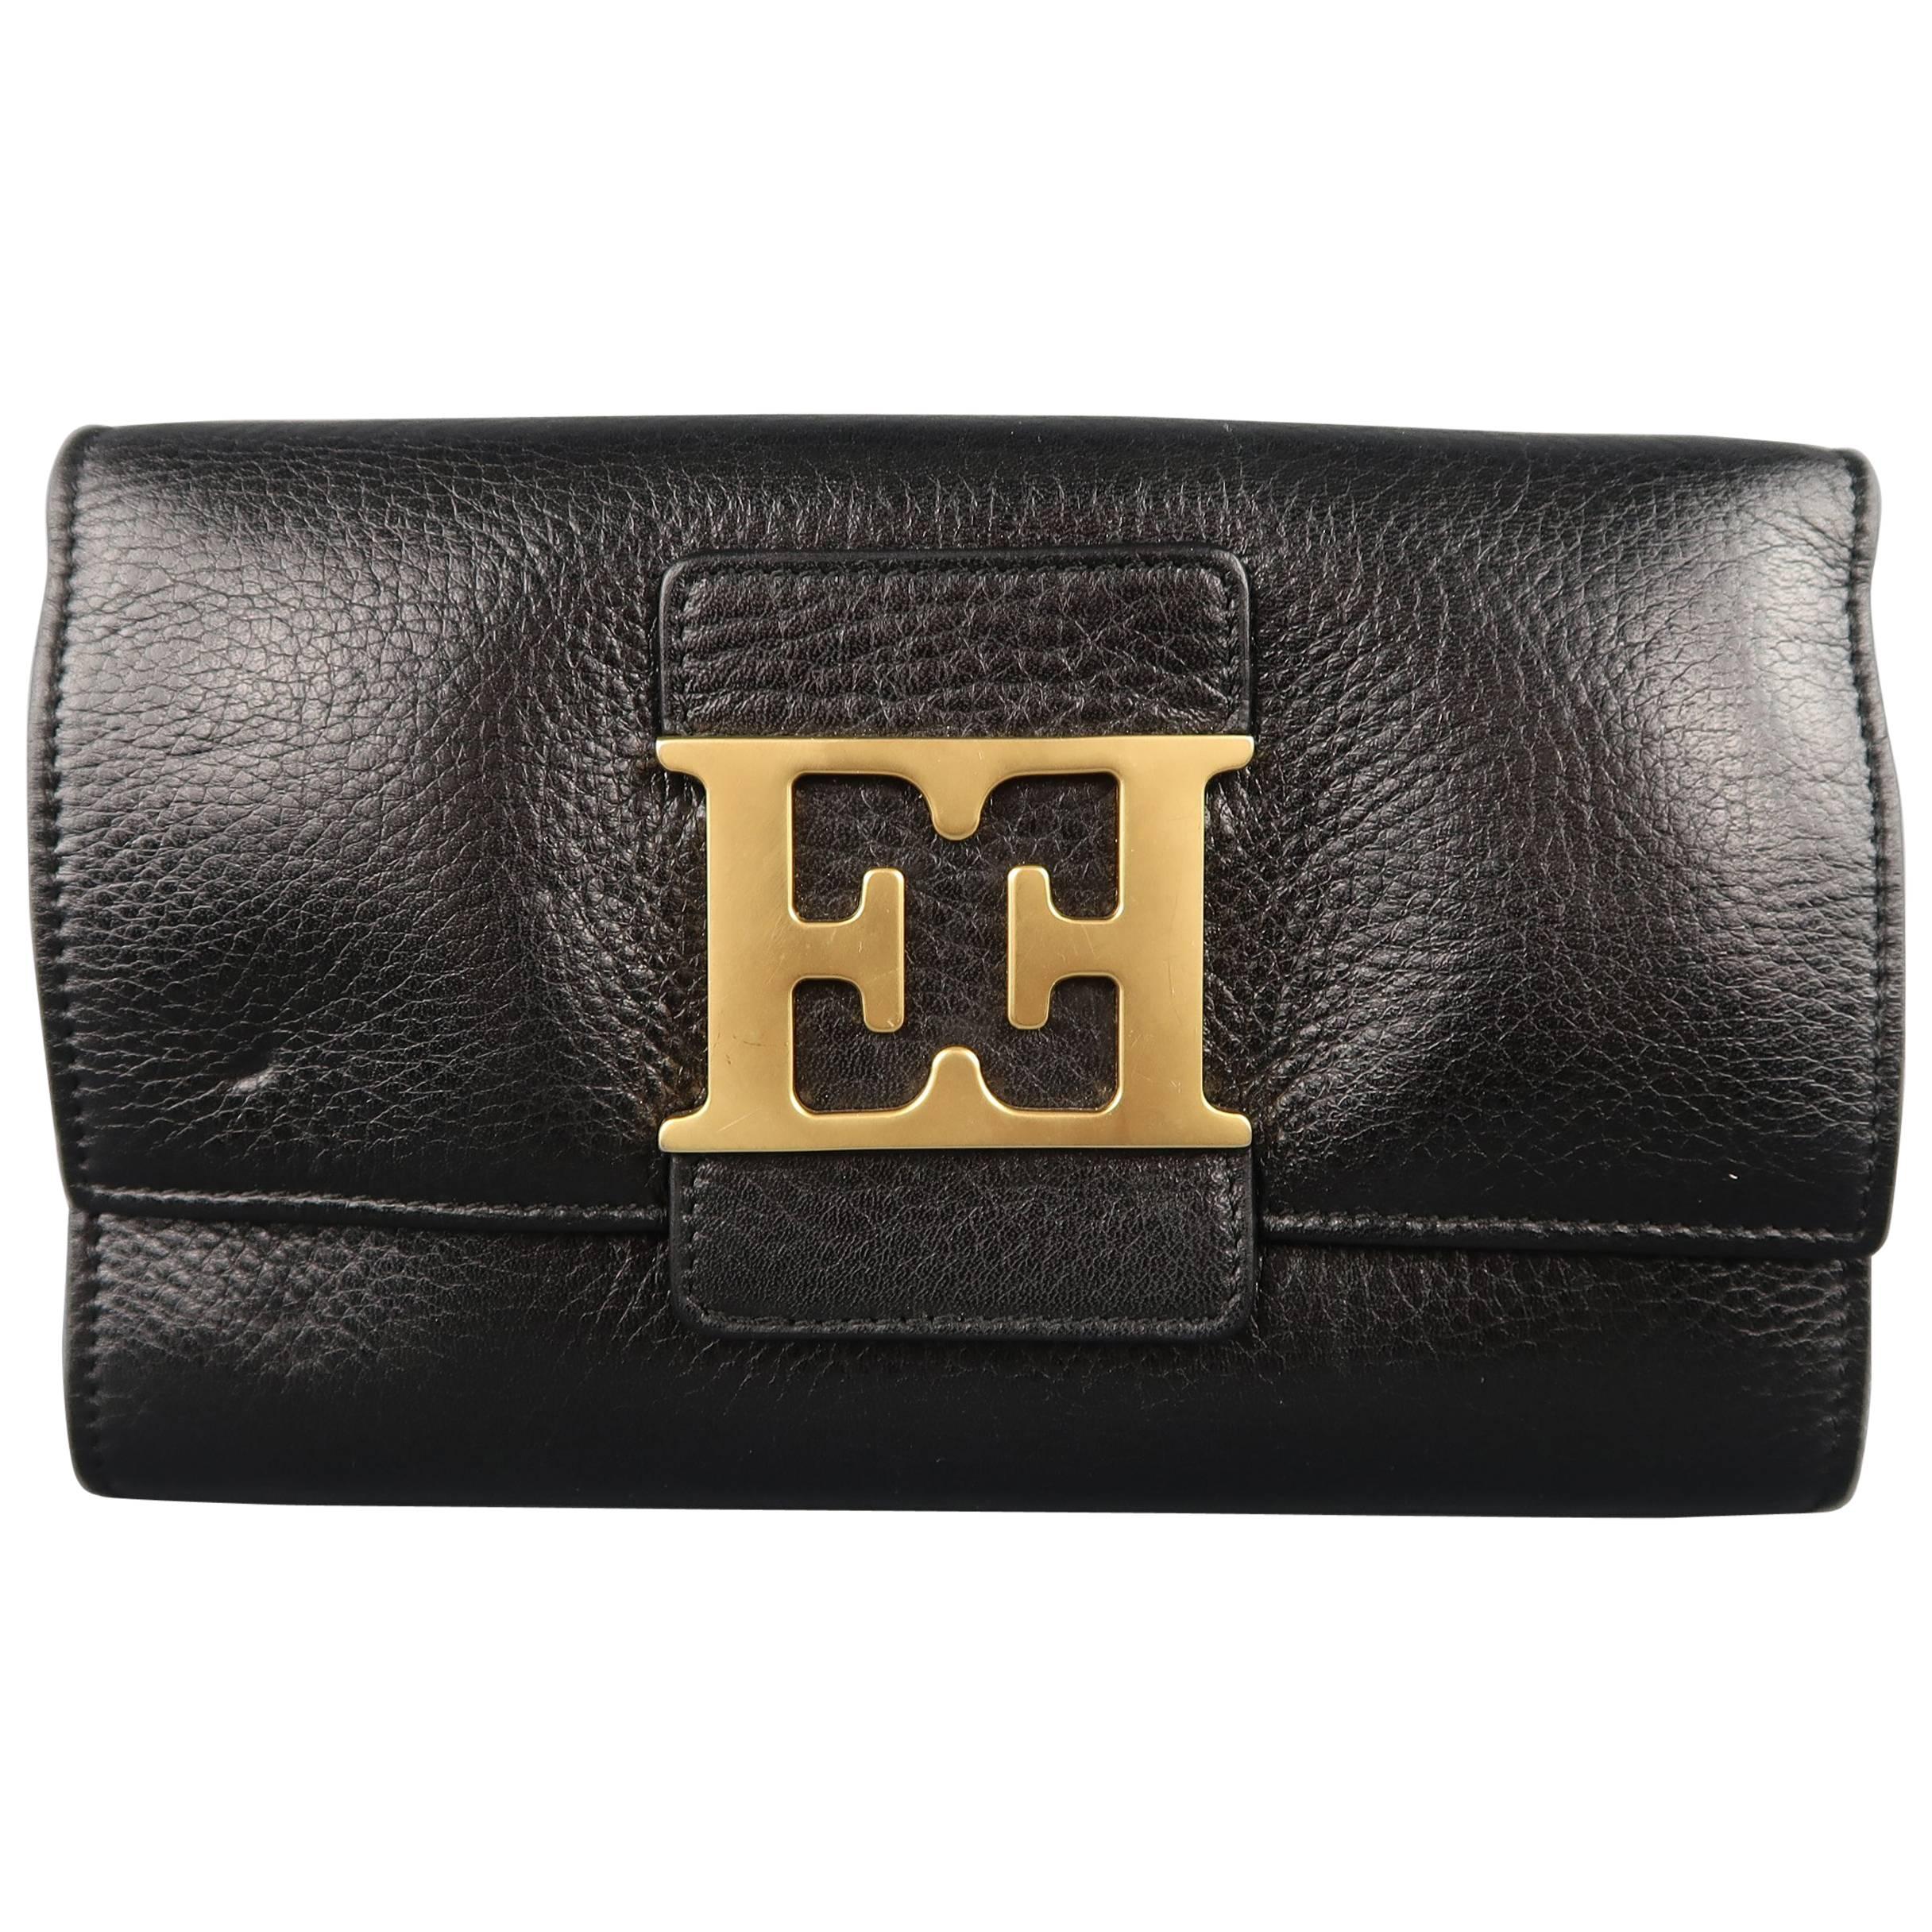  Escada Black Leather Gold Double E Flap Wallet